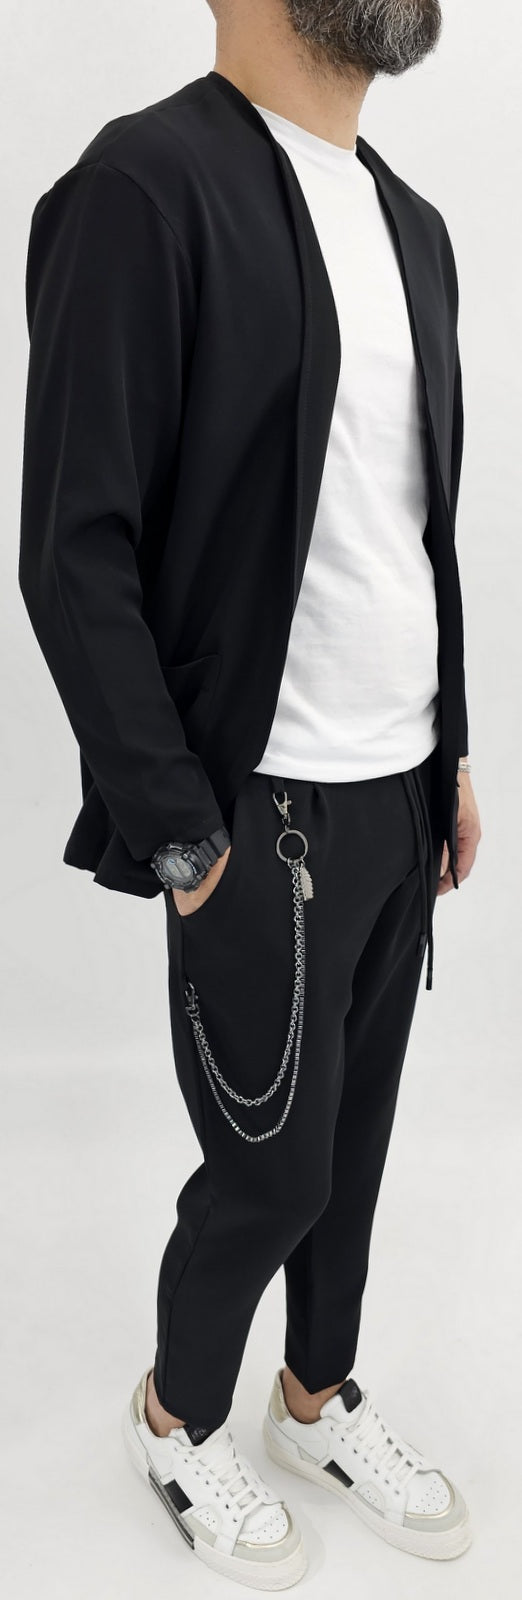 Completo uomo modello Japan over size tessuto morbido giacca e pantalone italy